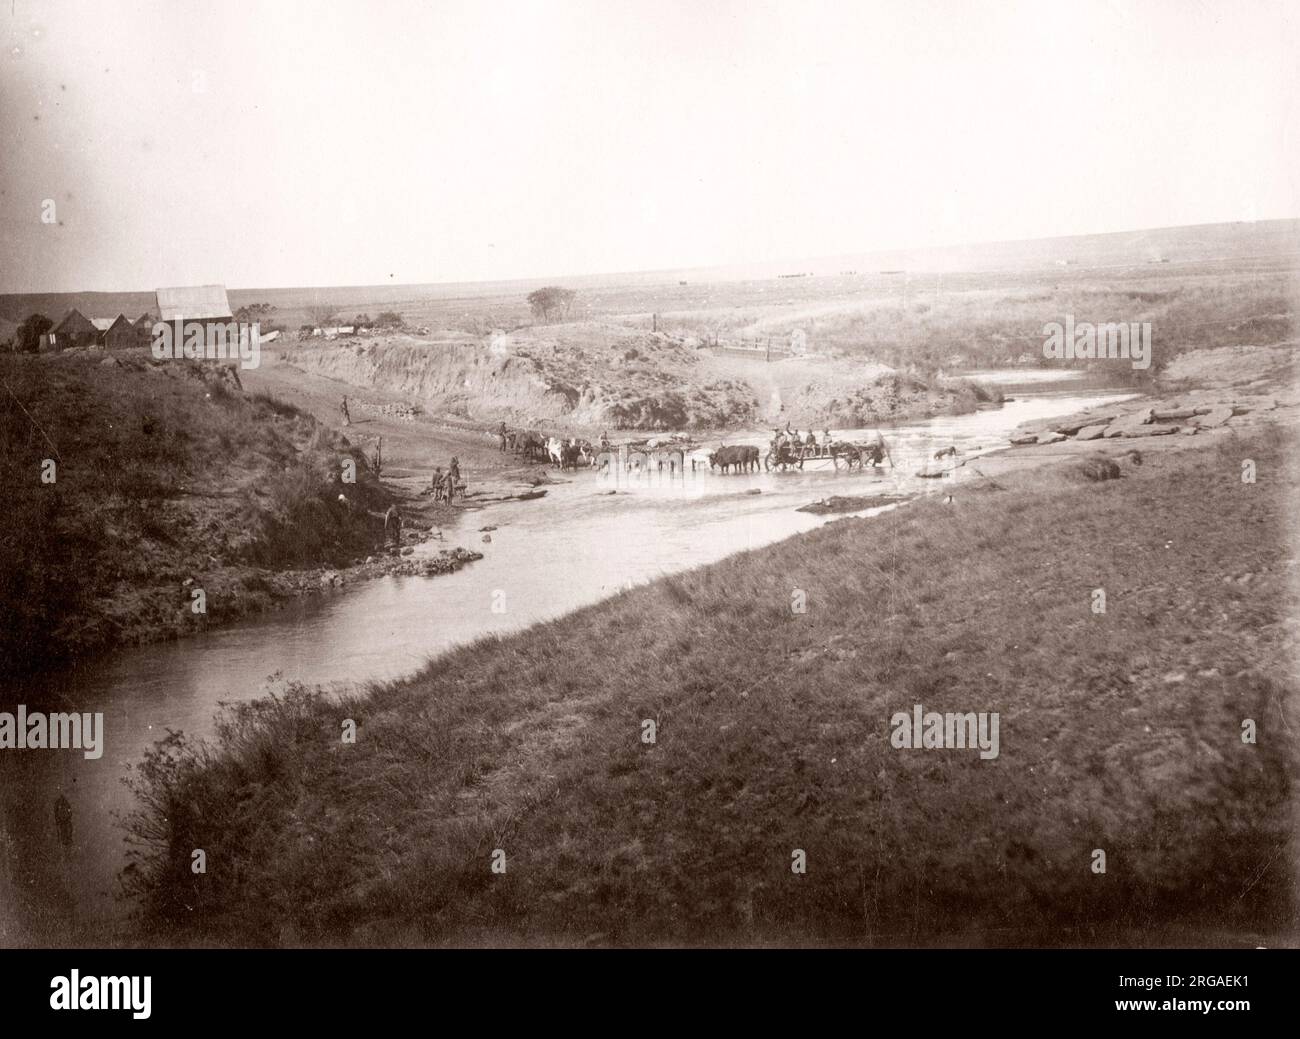 Ochse gezogener Waggon, der Fluss überquert, Südafrika, c,1900 Stockfoto